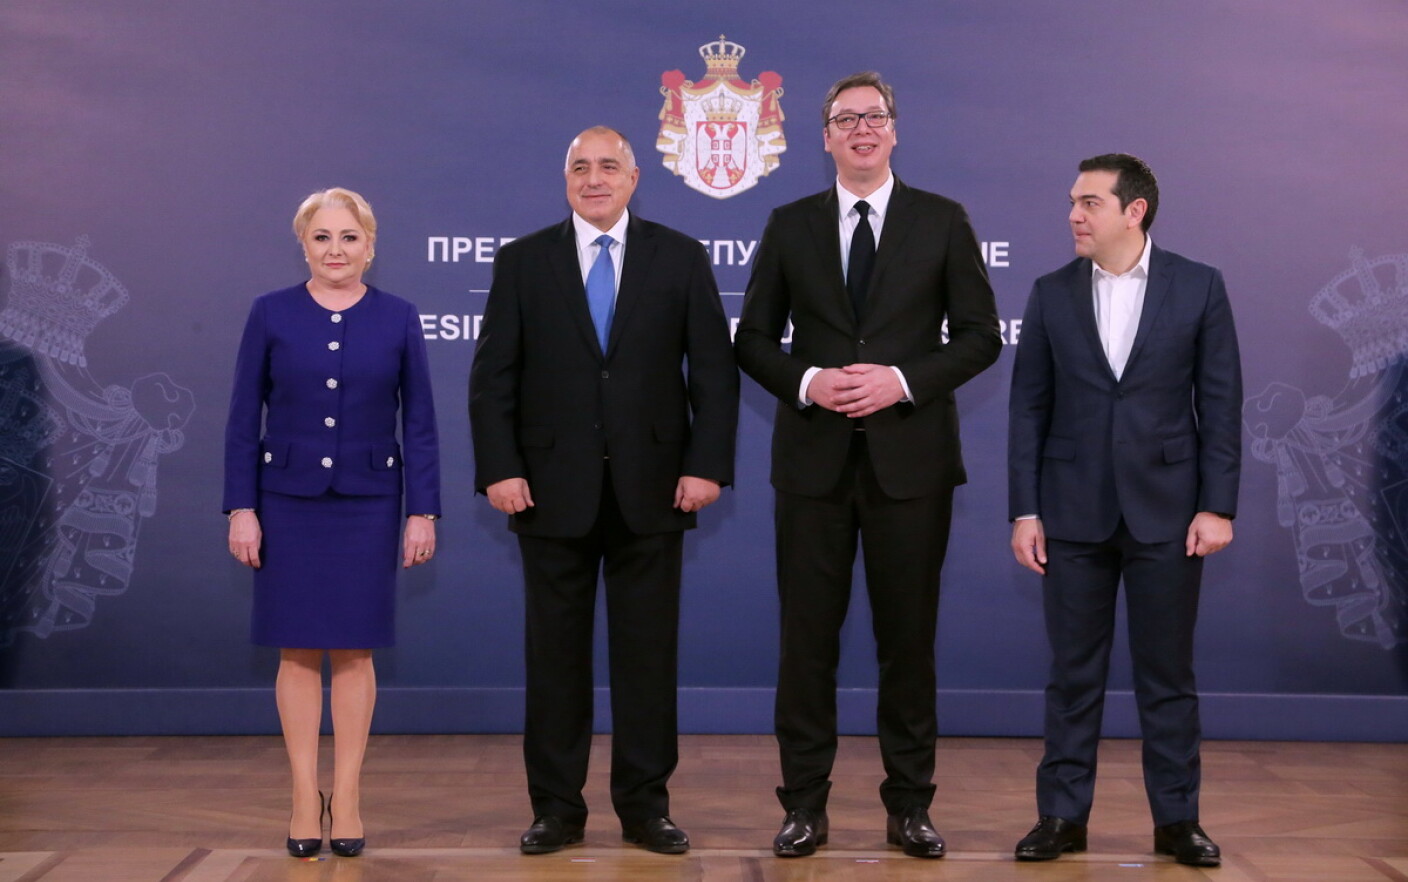 Aleksandar Vucic, Boico Borisov, Alexis Tsipras, Viorica Dancila